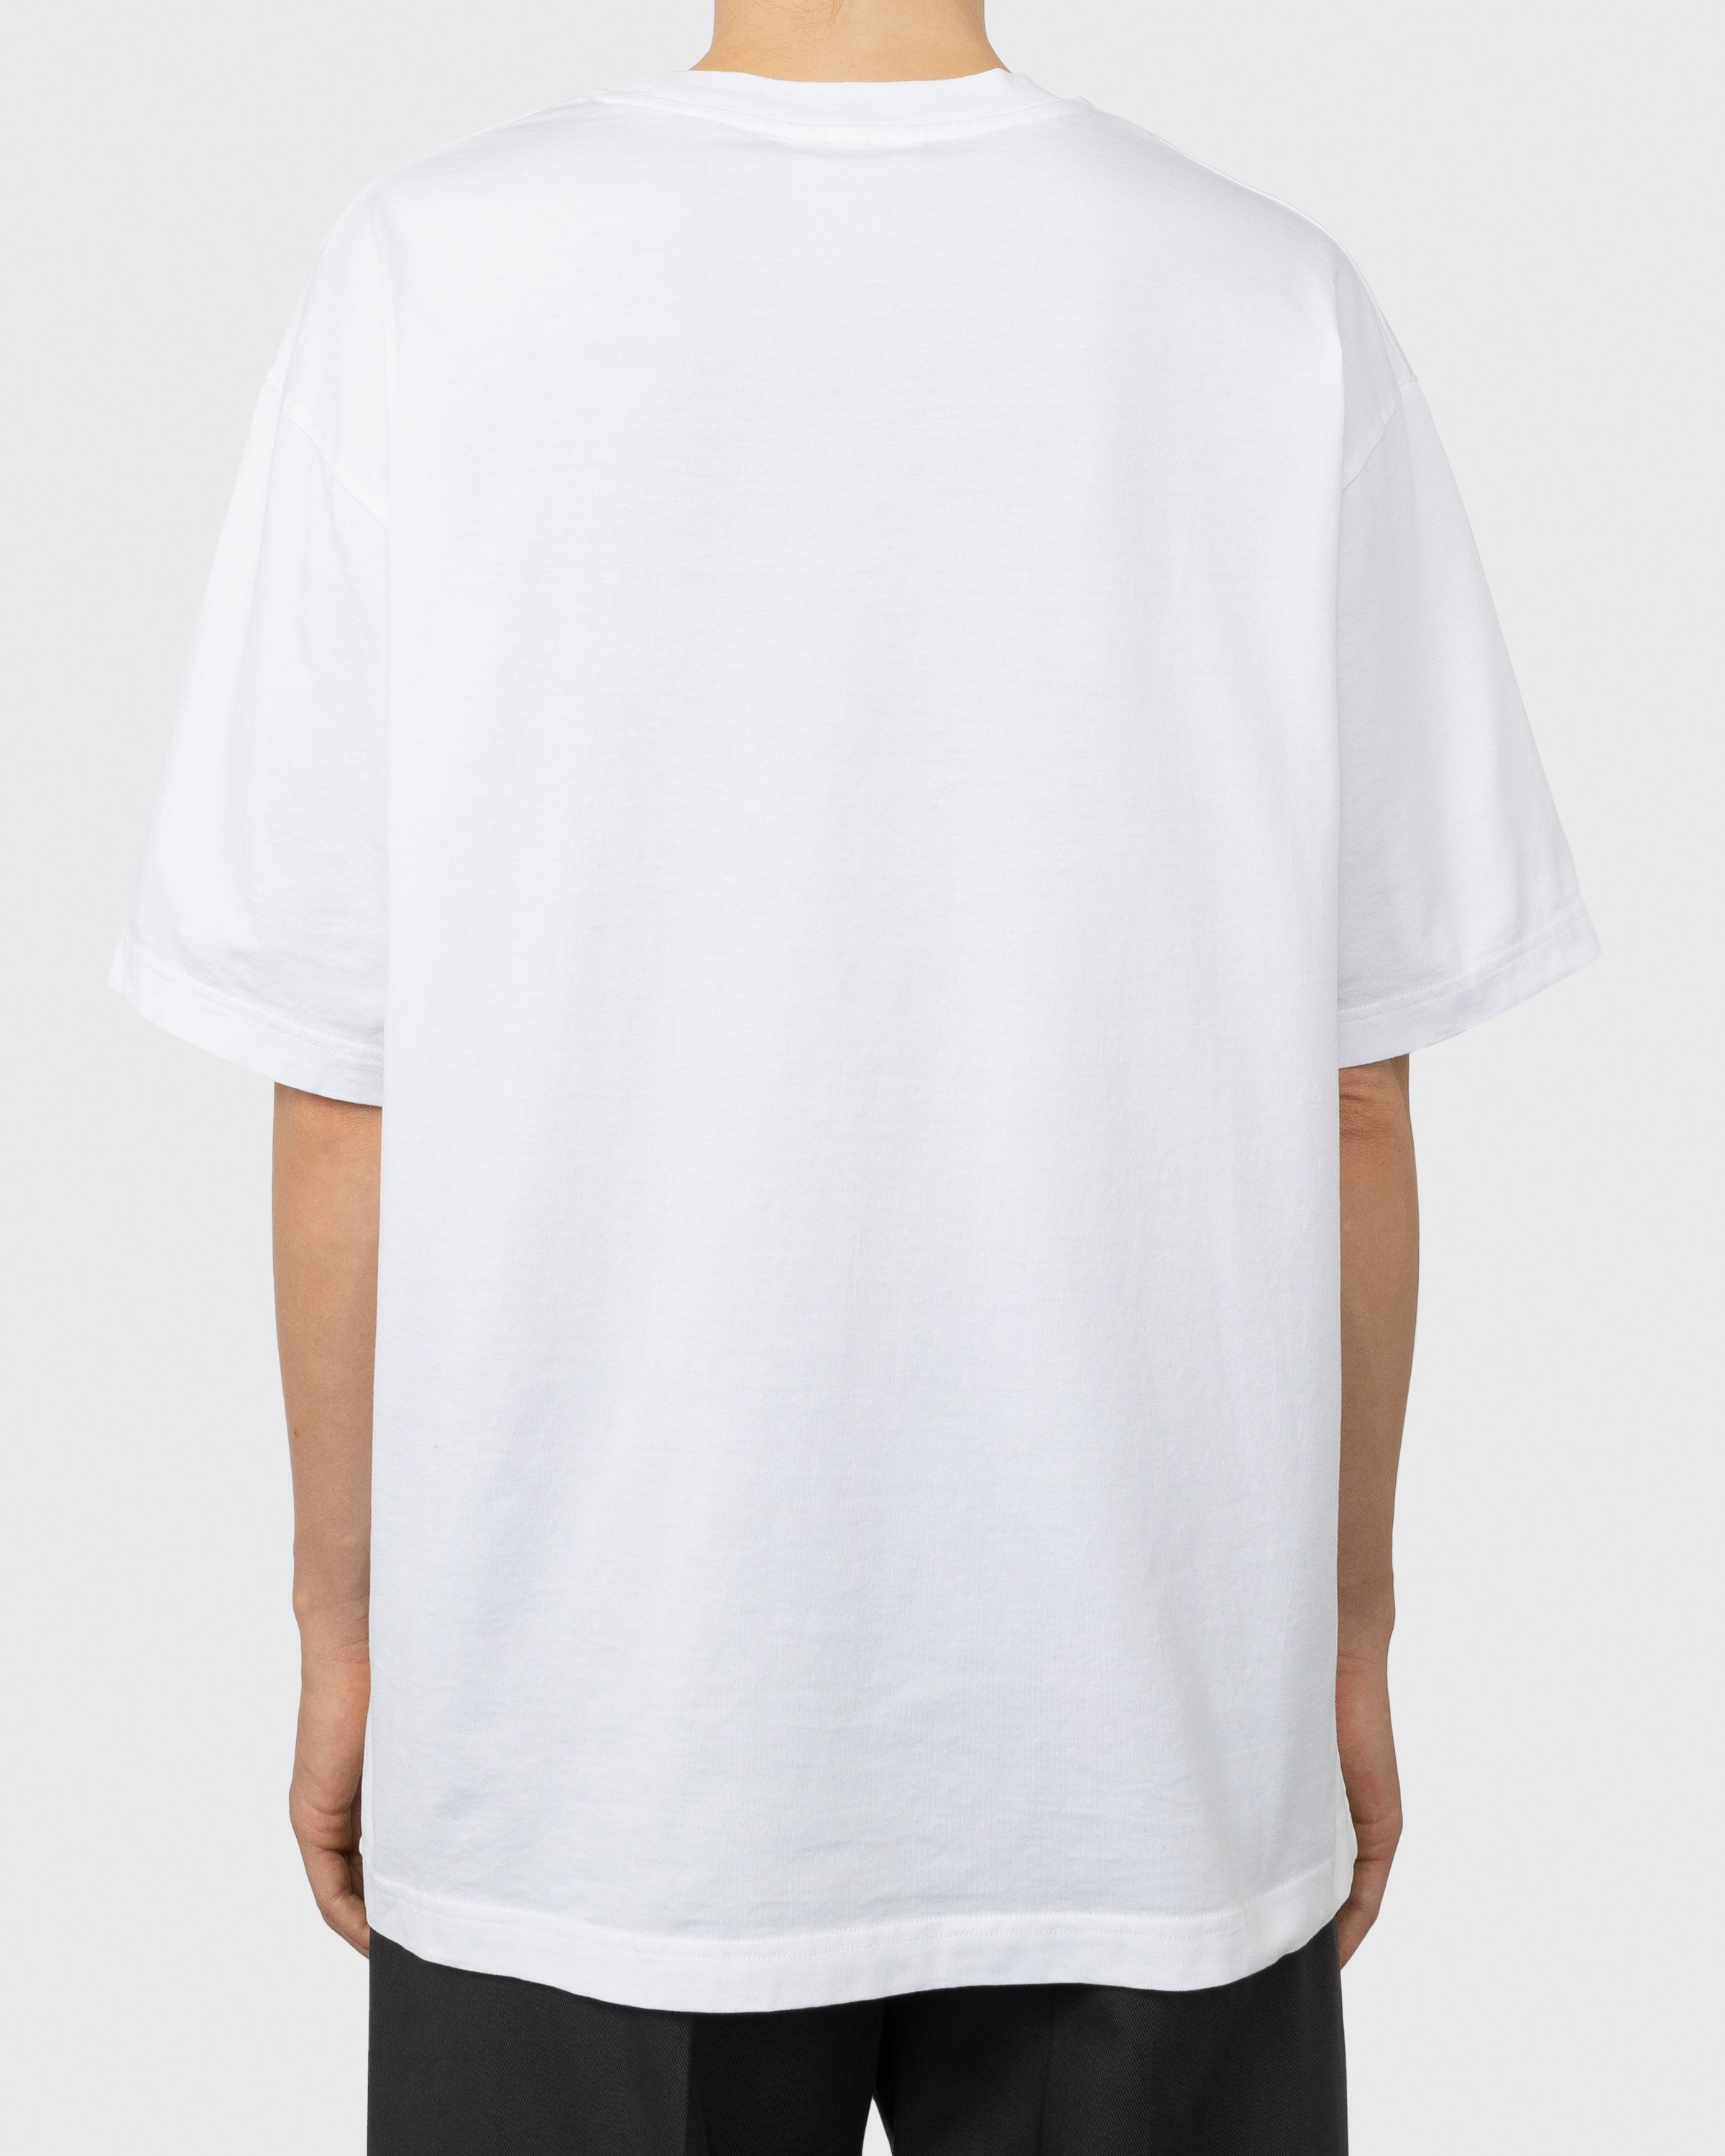 Acne Studios - Organic Cotton Pocket T-Shirt White - Clothing - White - Image 4